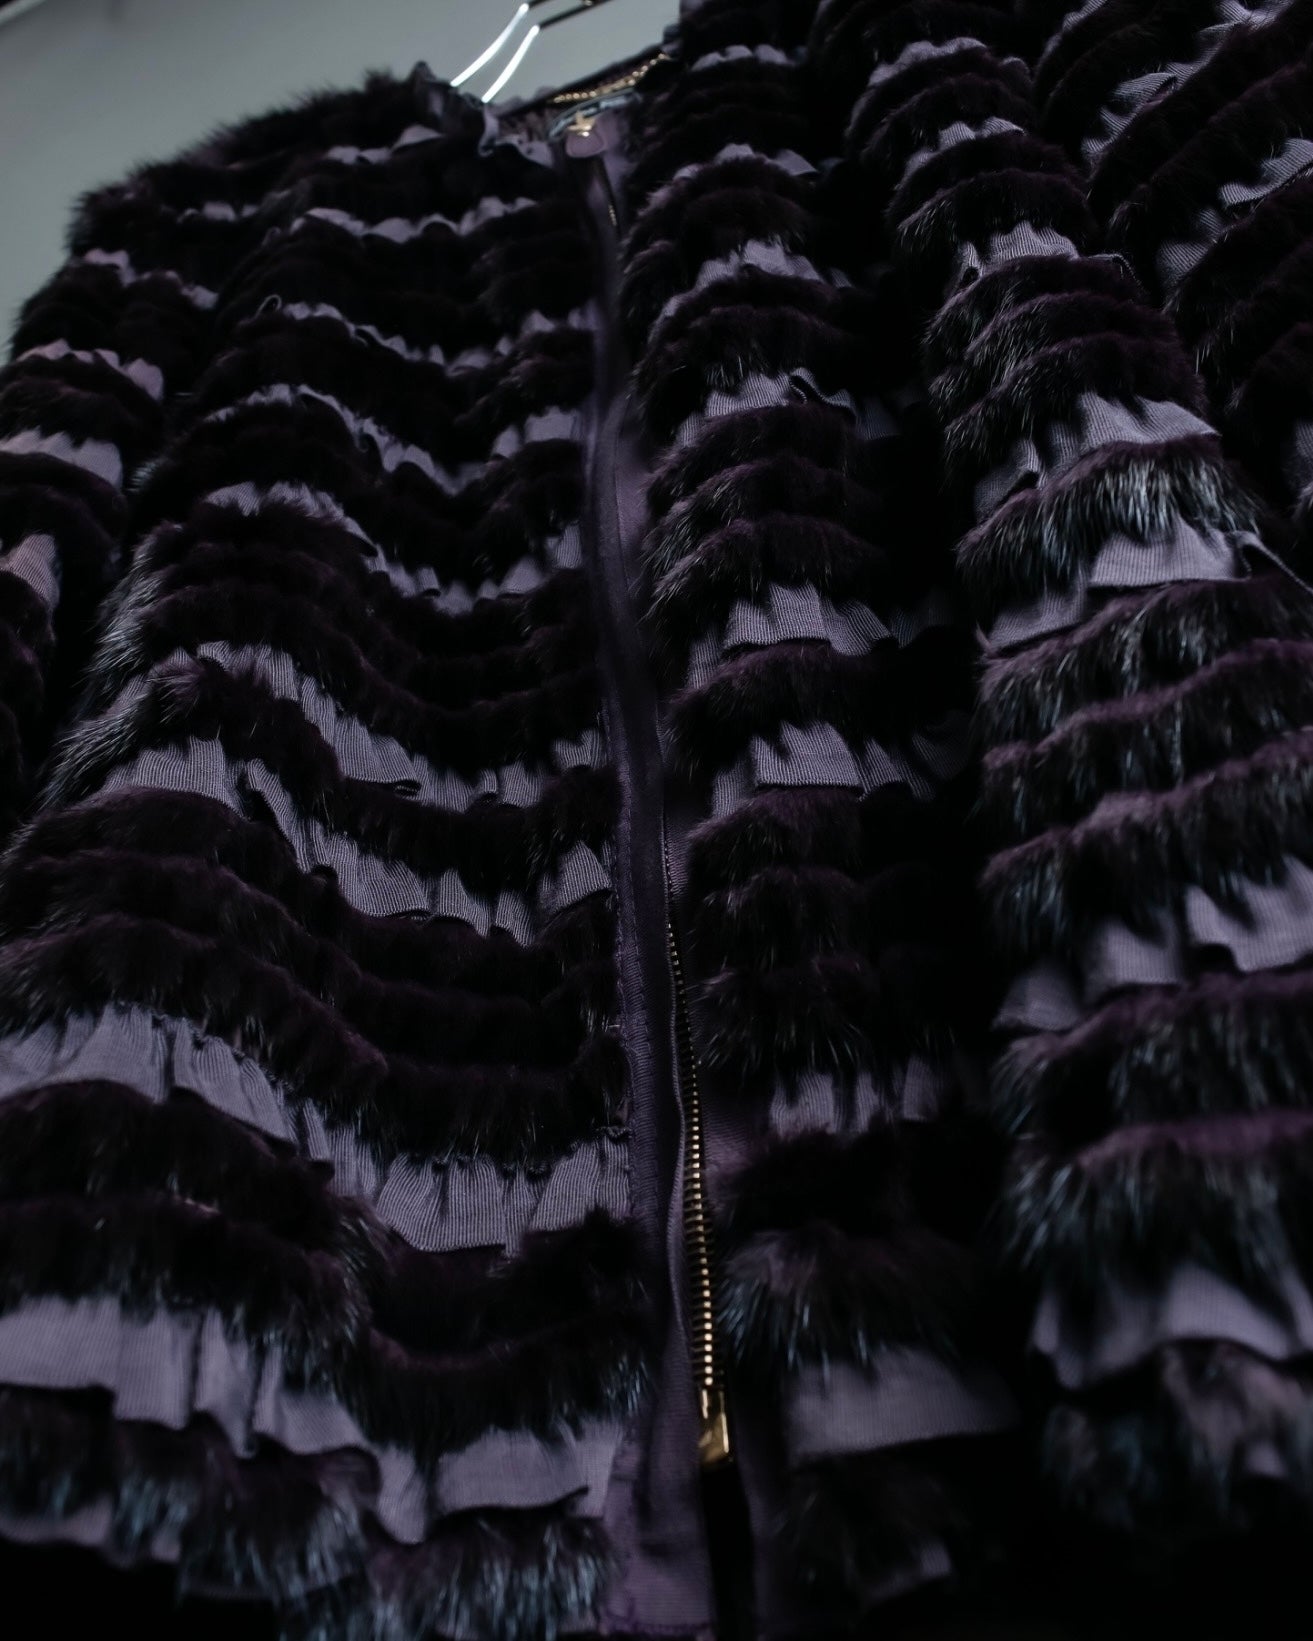 "Salvatore Ferragamo" Gathered fabric x mink decorated zip-up jacket